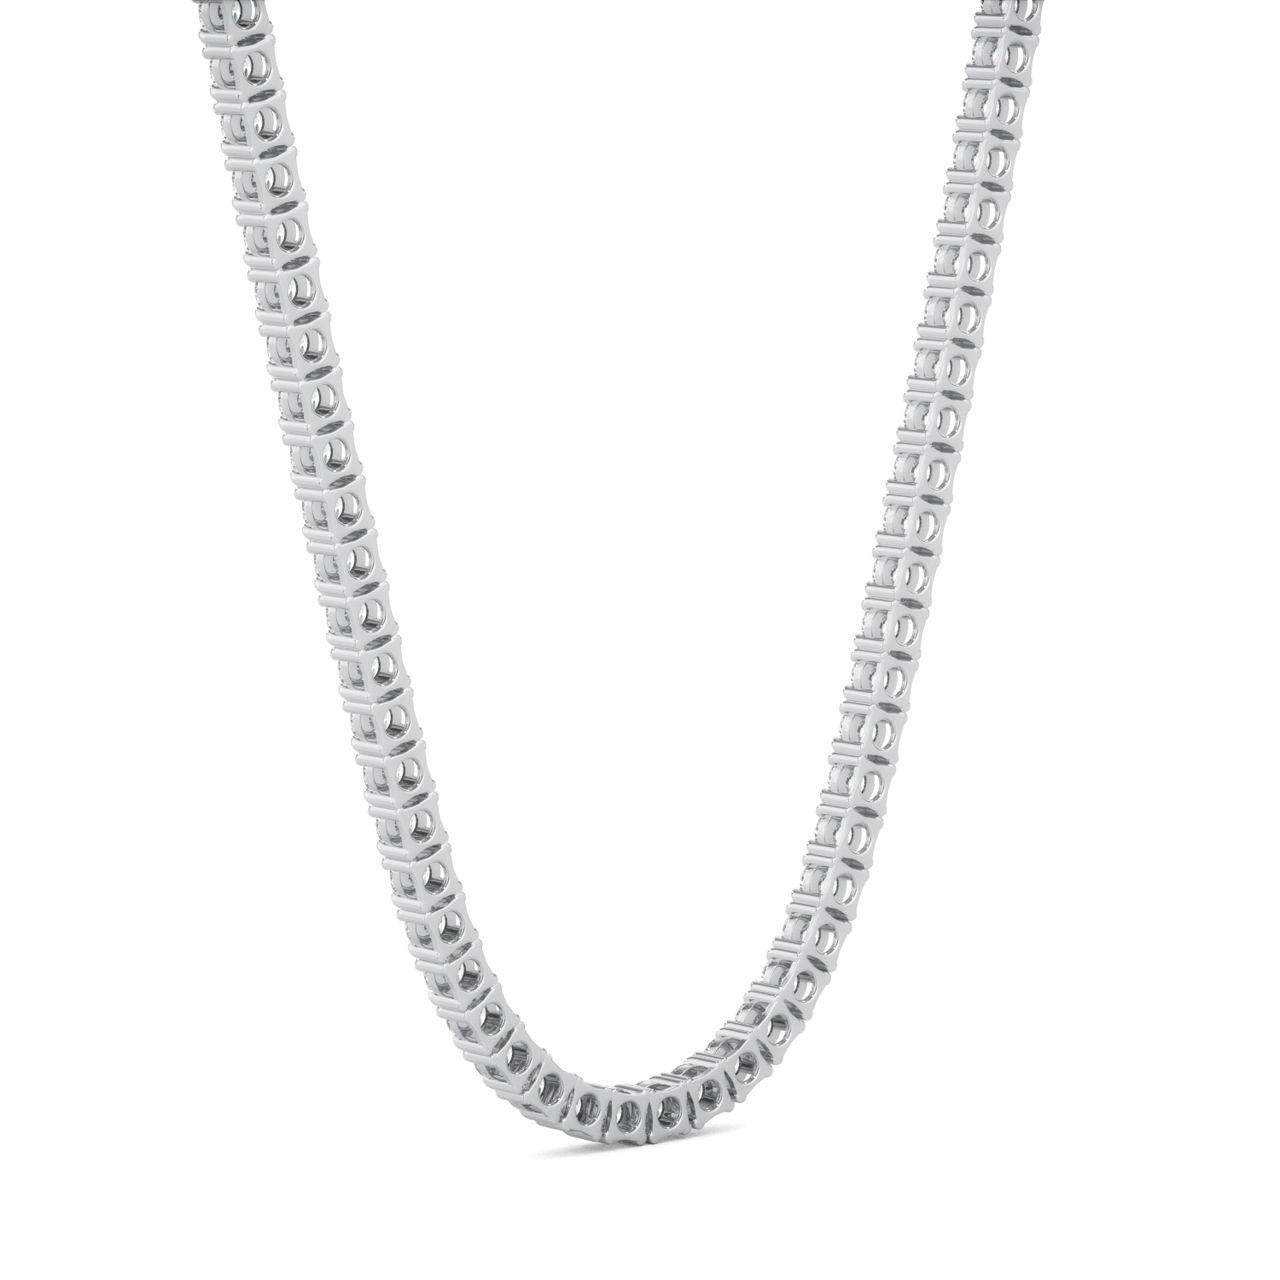 10 Carat Tennis Diamond Necklace 
amazing brightness